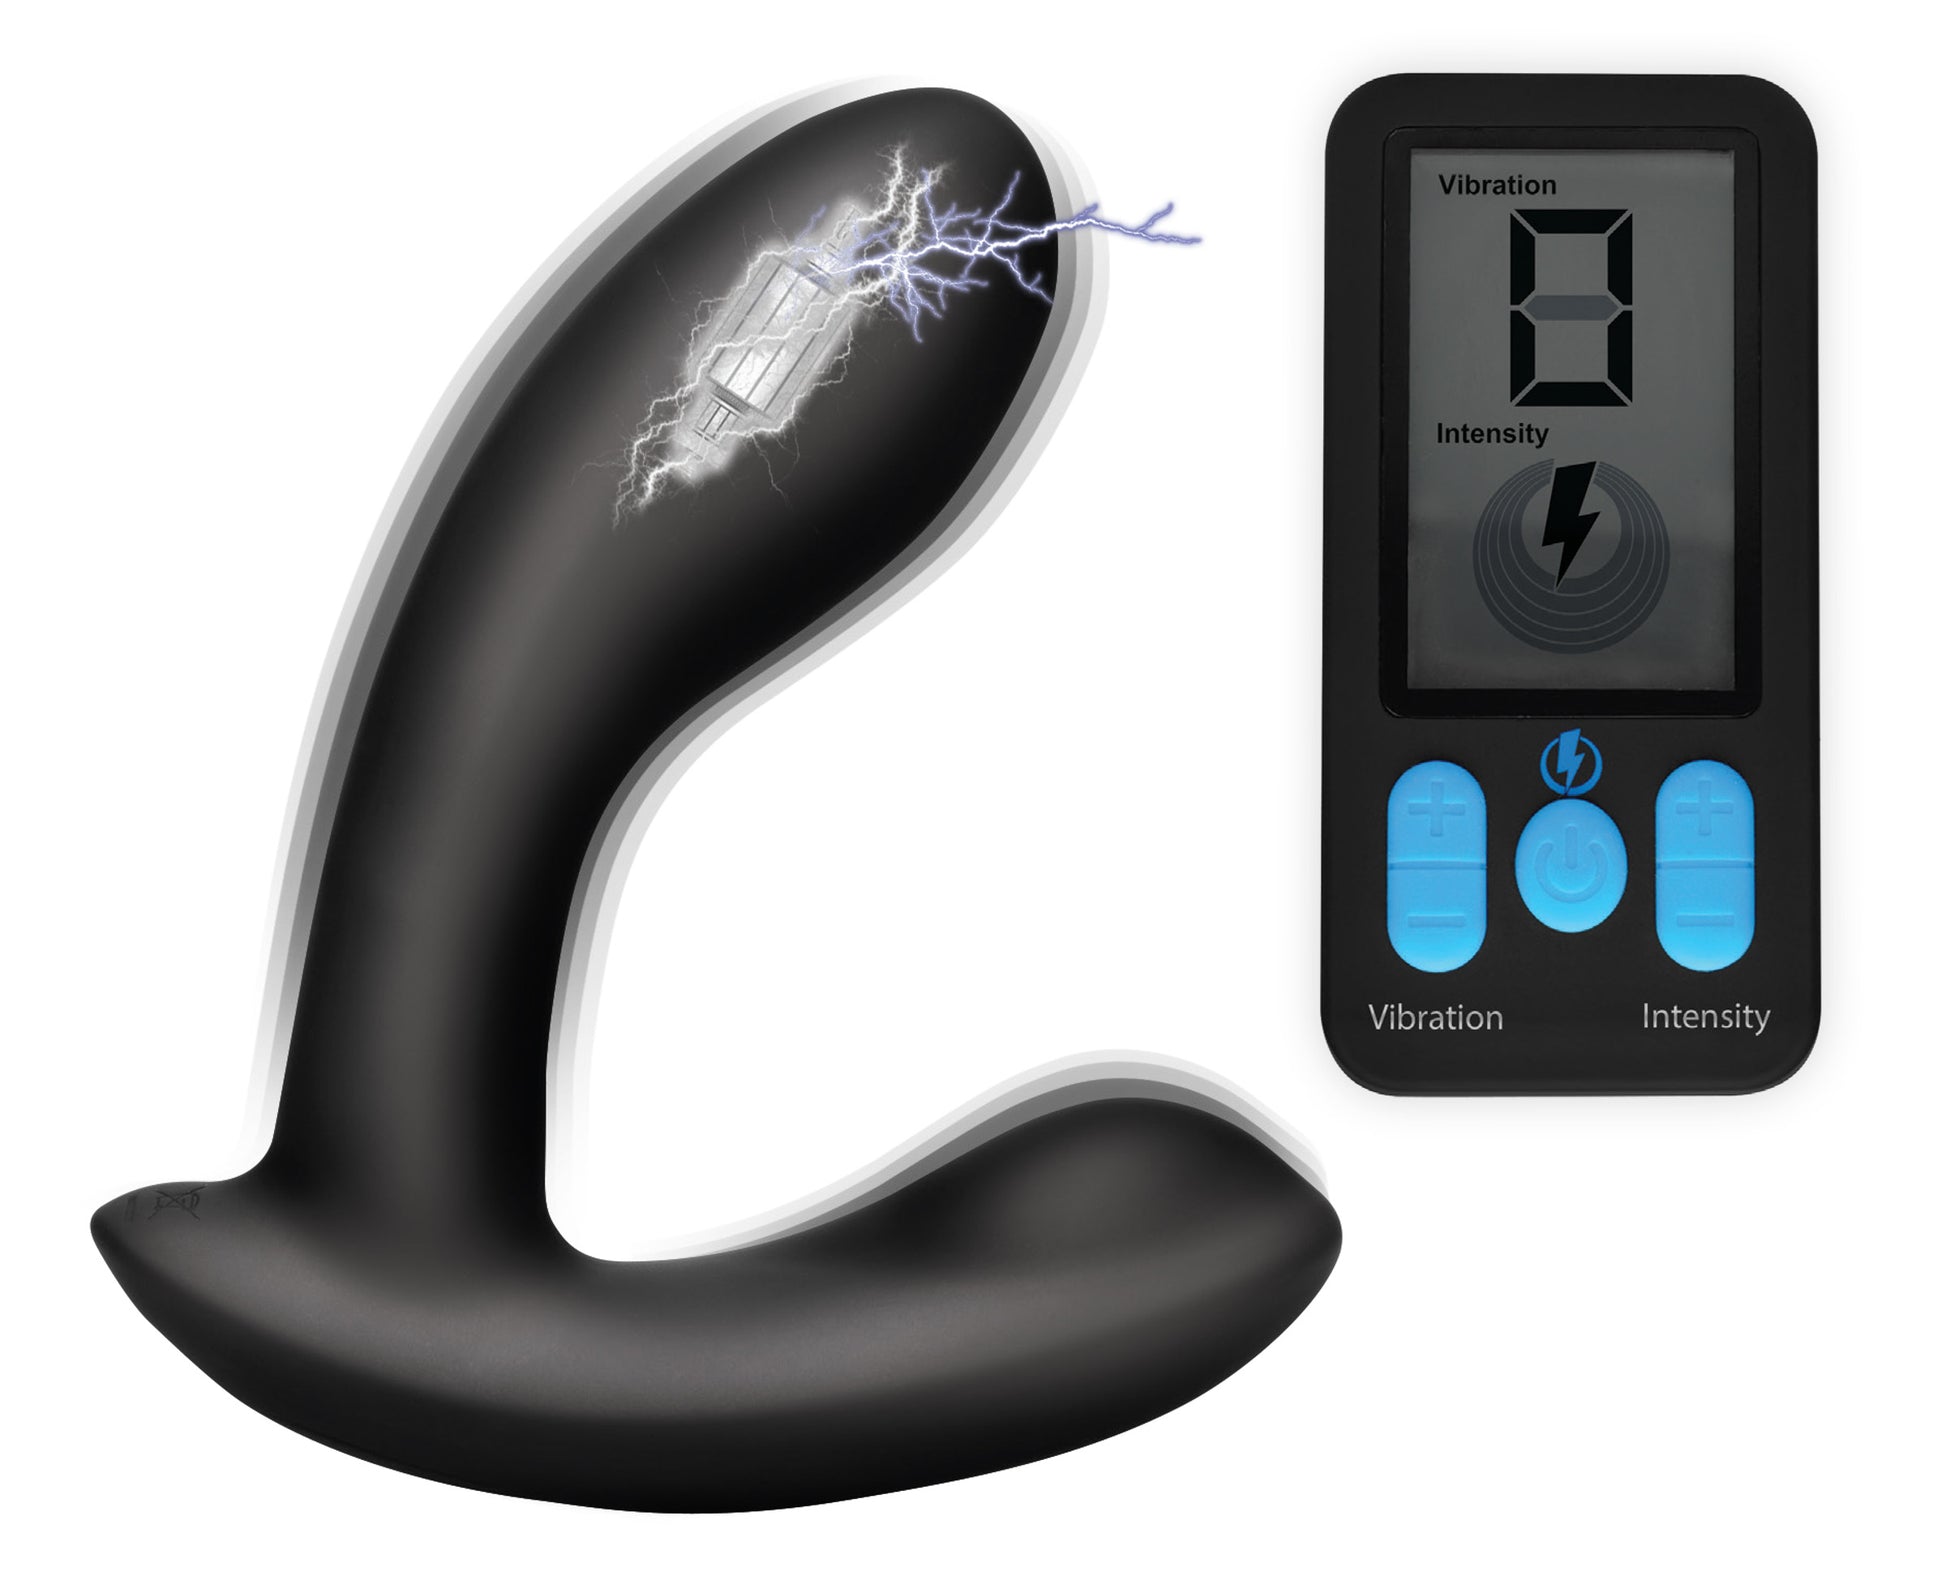 E-Stim Pro Silicone Vibrating Prostate Massager with Remote Control - UABDSM